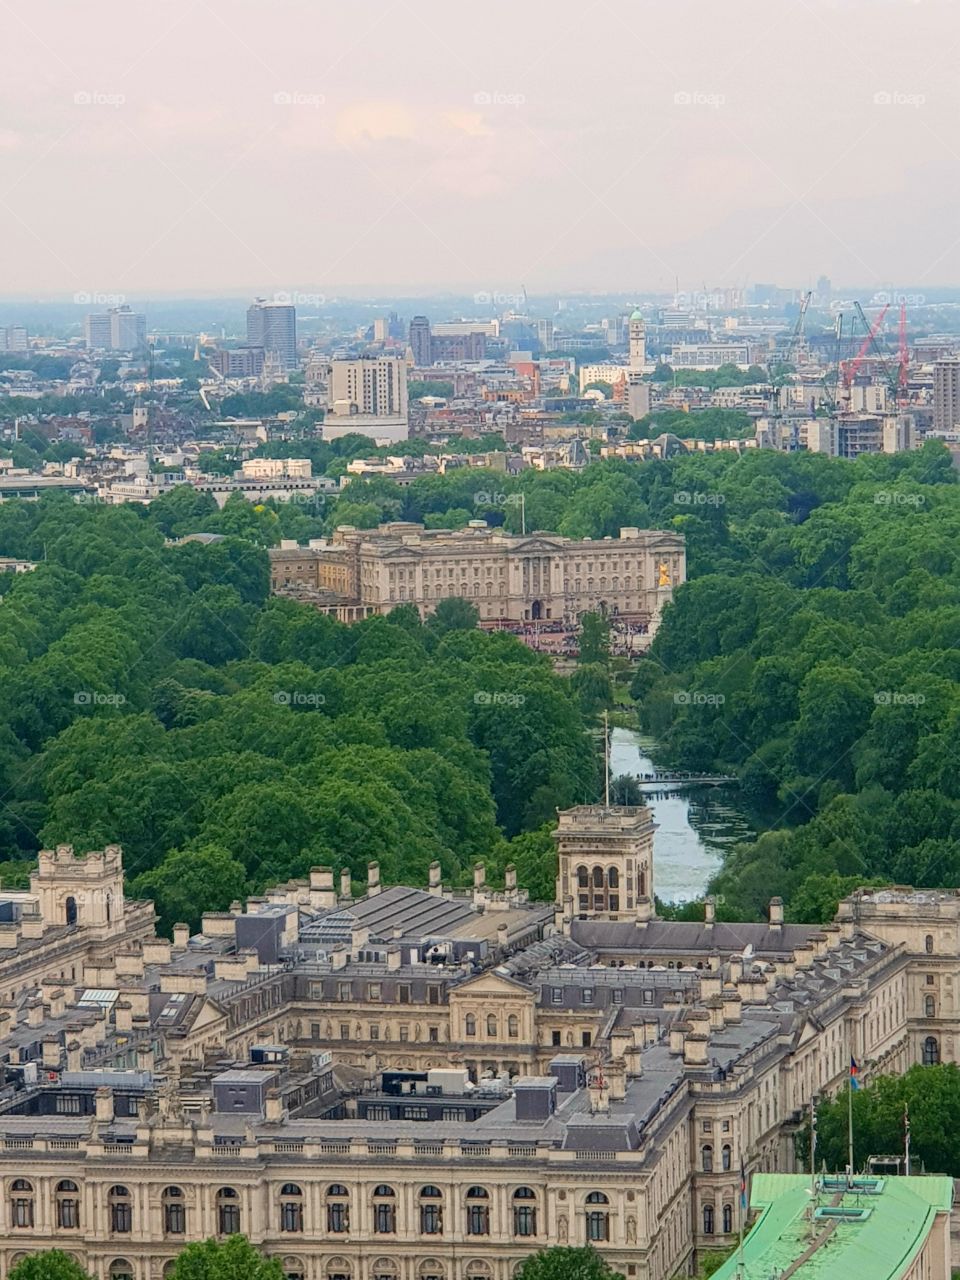 Buckingham Palace, View from London Eye